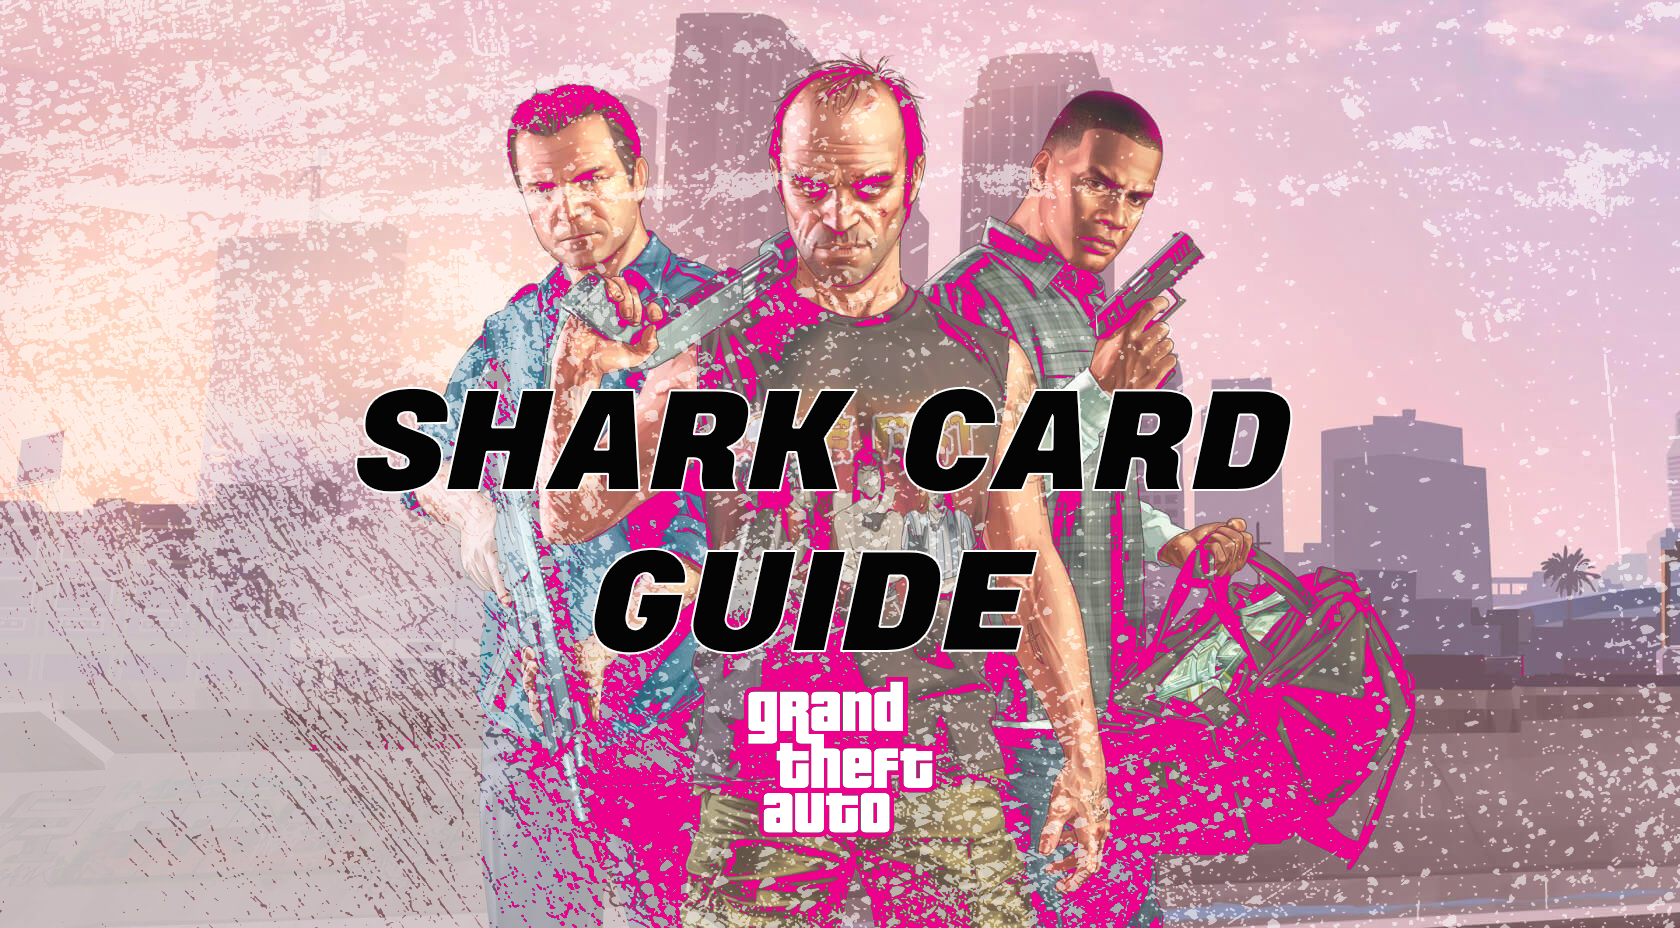 gta 5 shark card